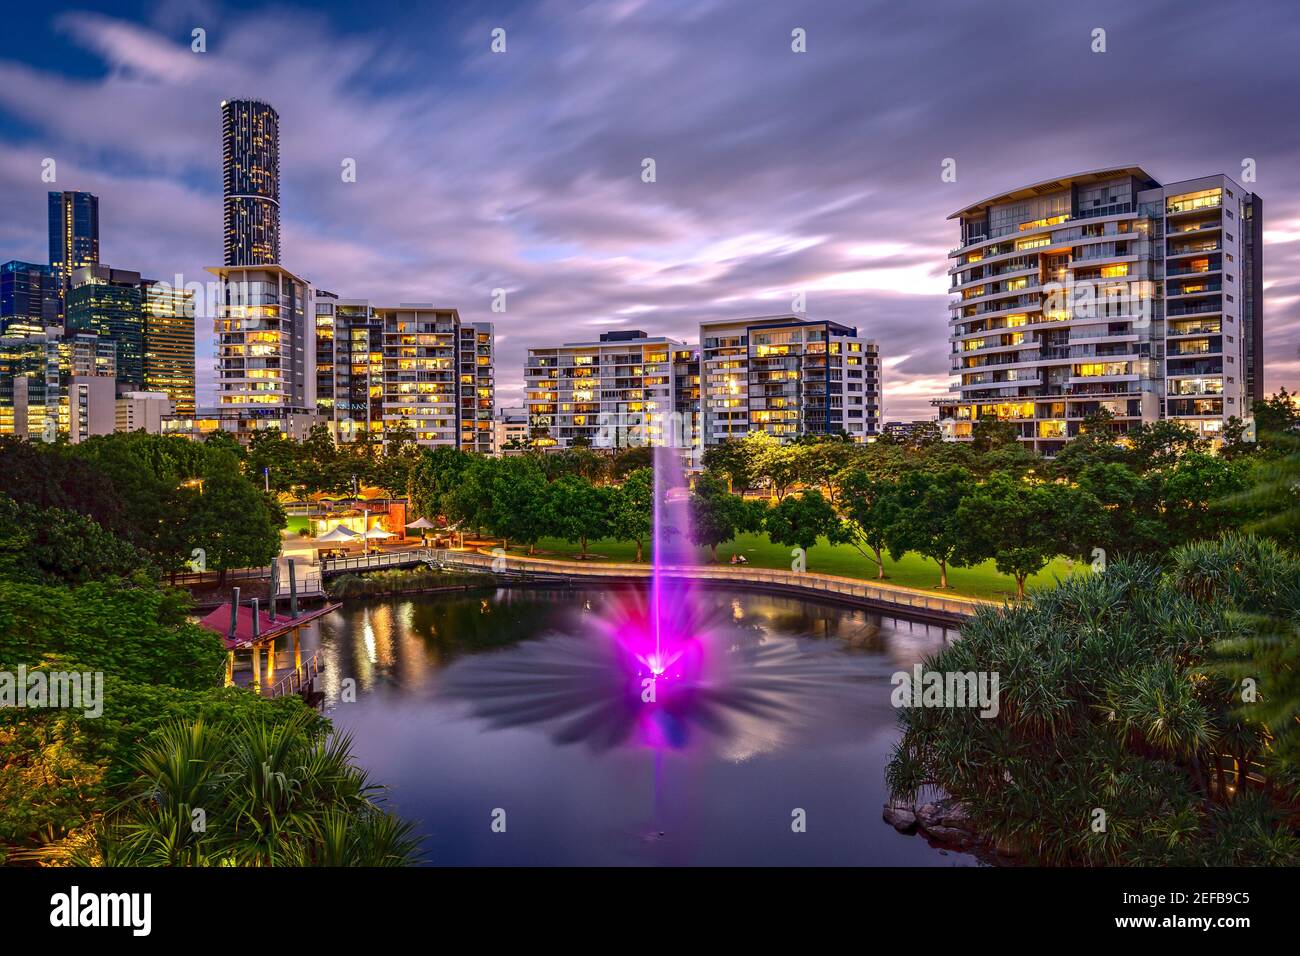 Residential apartment buildings around the Roma Street Parkland with illuminated fountain, Brisbane, Australia Stock Photo